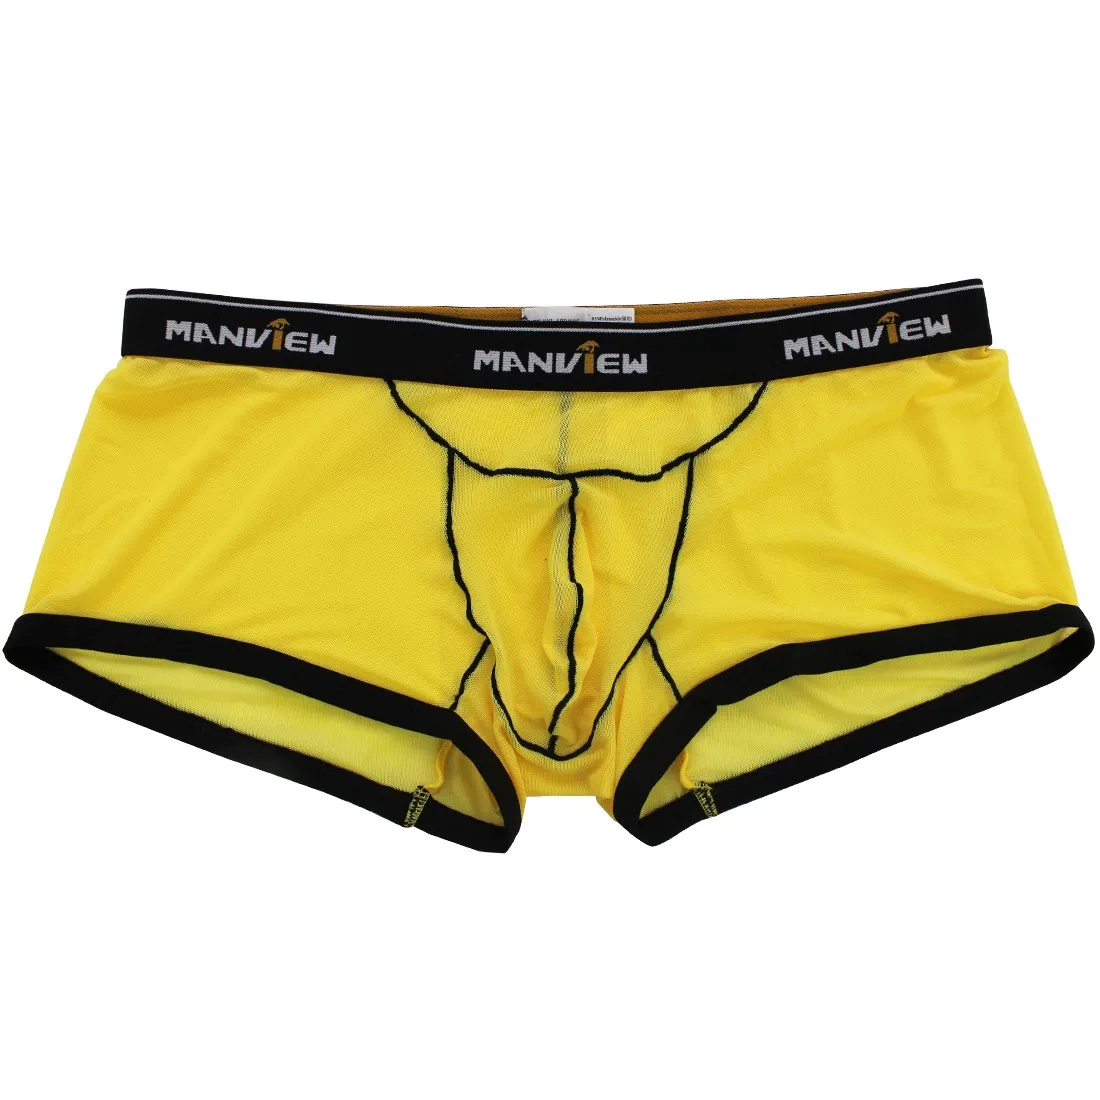 https://ae01.alicdn.com/kf/H169b78e84a224dbc8d8db0483396c3380/inhzoy-Men-Briefs-Lingerie-See-through-Mesh-Boxer-Shorts-Underwear-Gay-Thong-G-string-Homme-Erotic.jpg